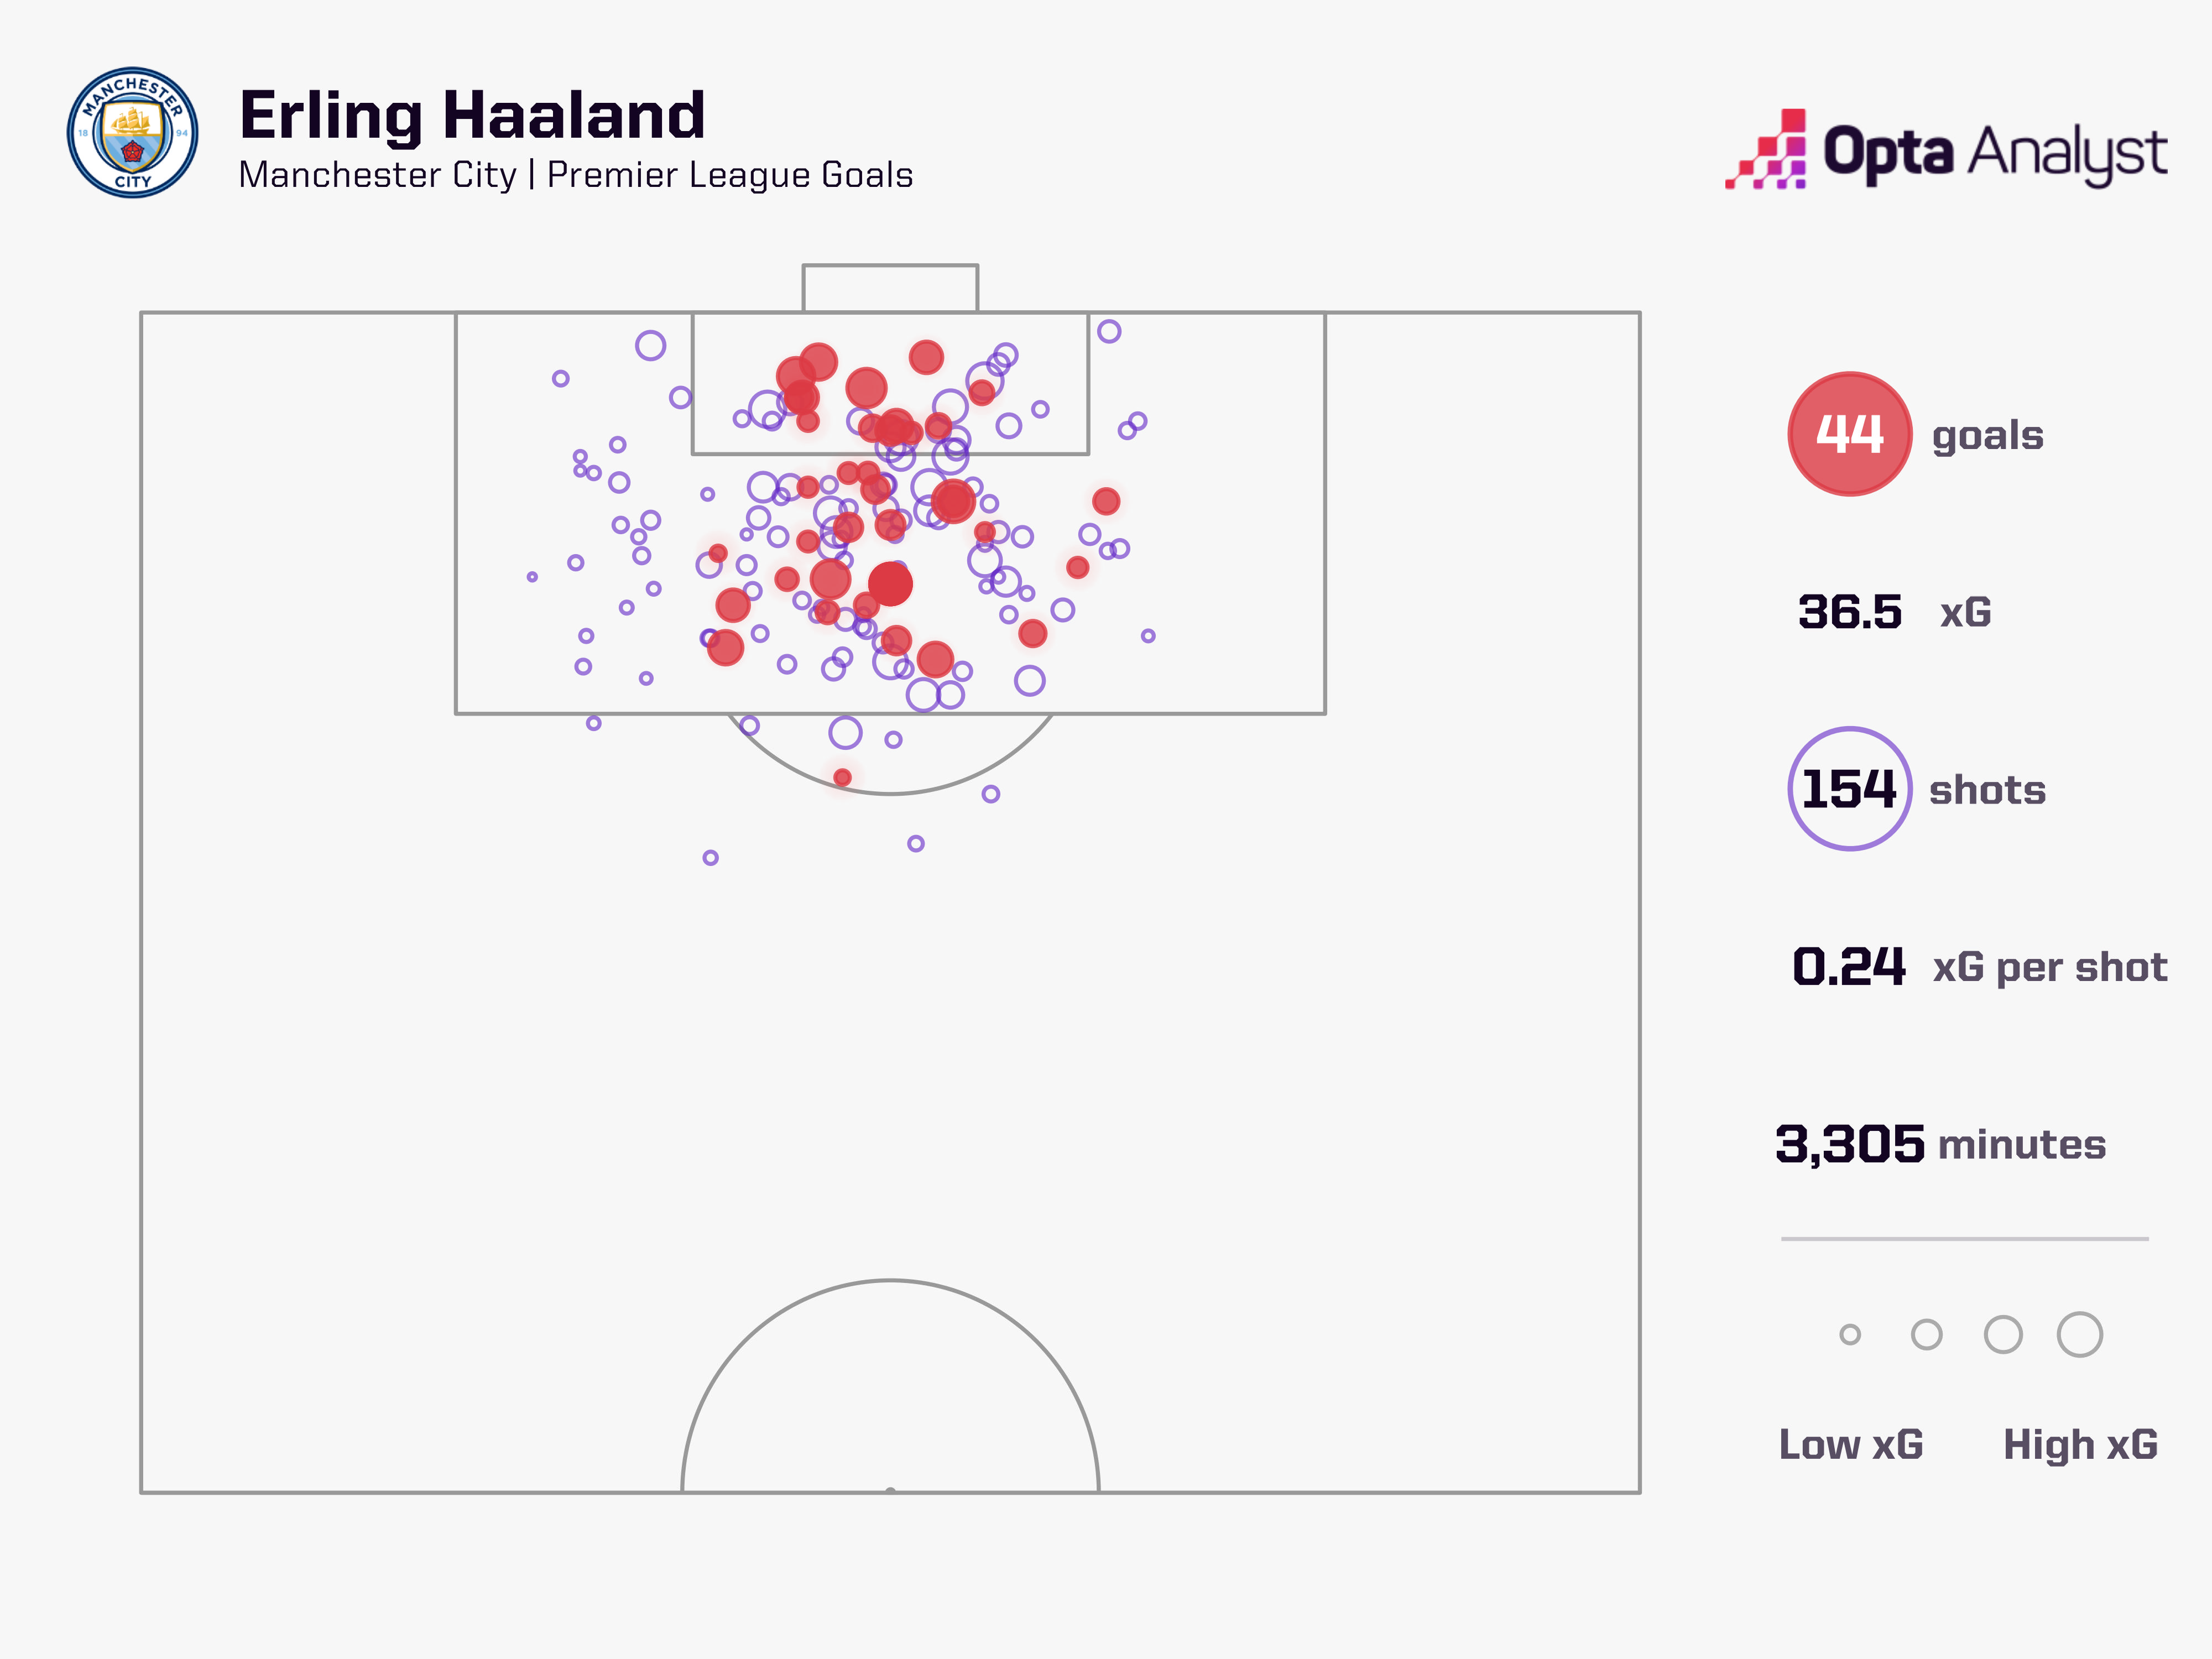 Erling Haaland's Premier League Goals 44